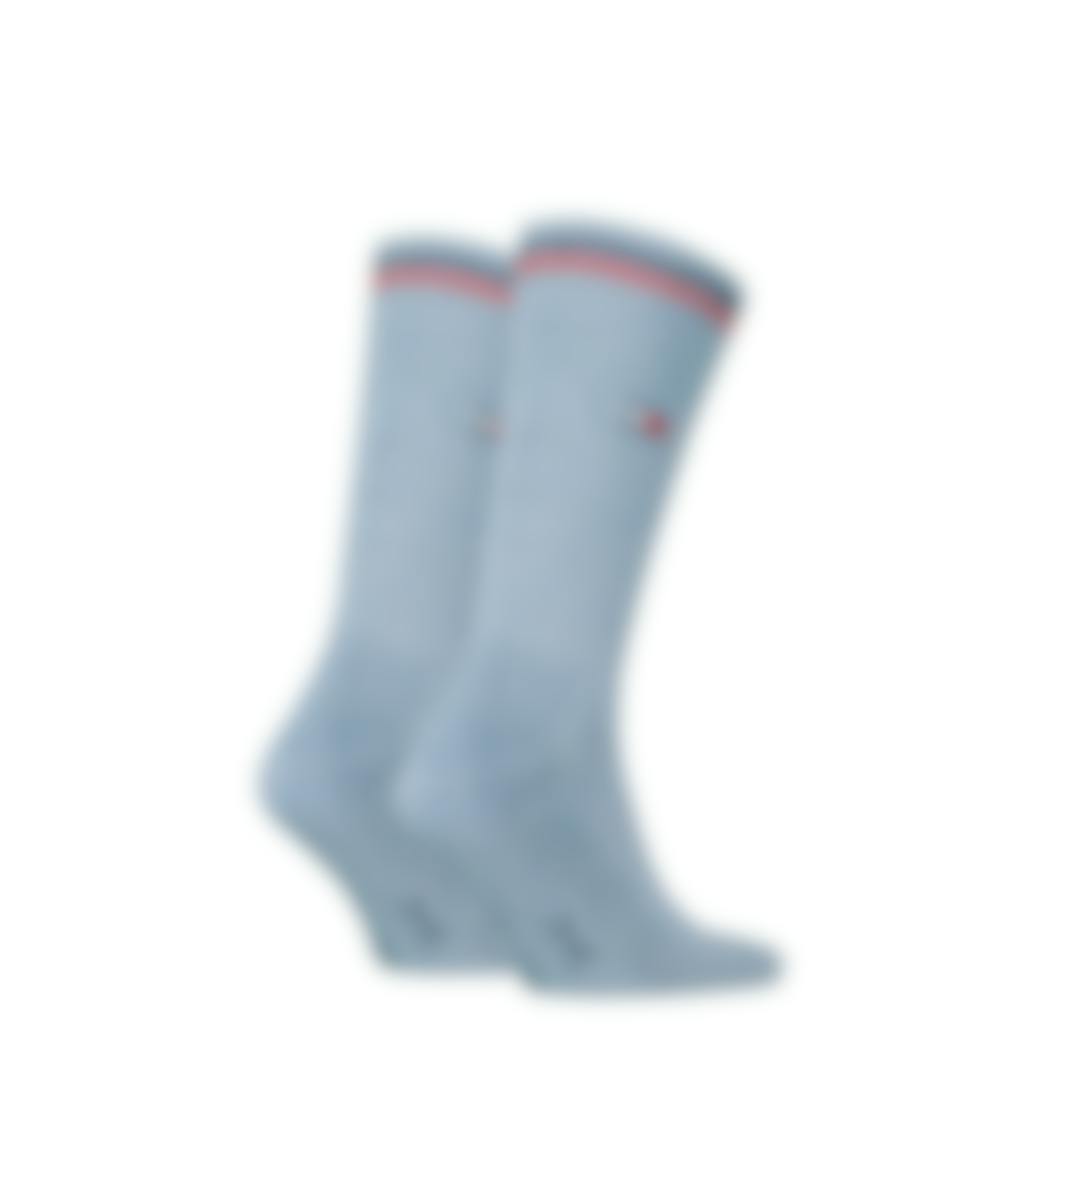 Tommy Hilfiger sokken 2 paar Uni Sock Iconic H